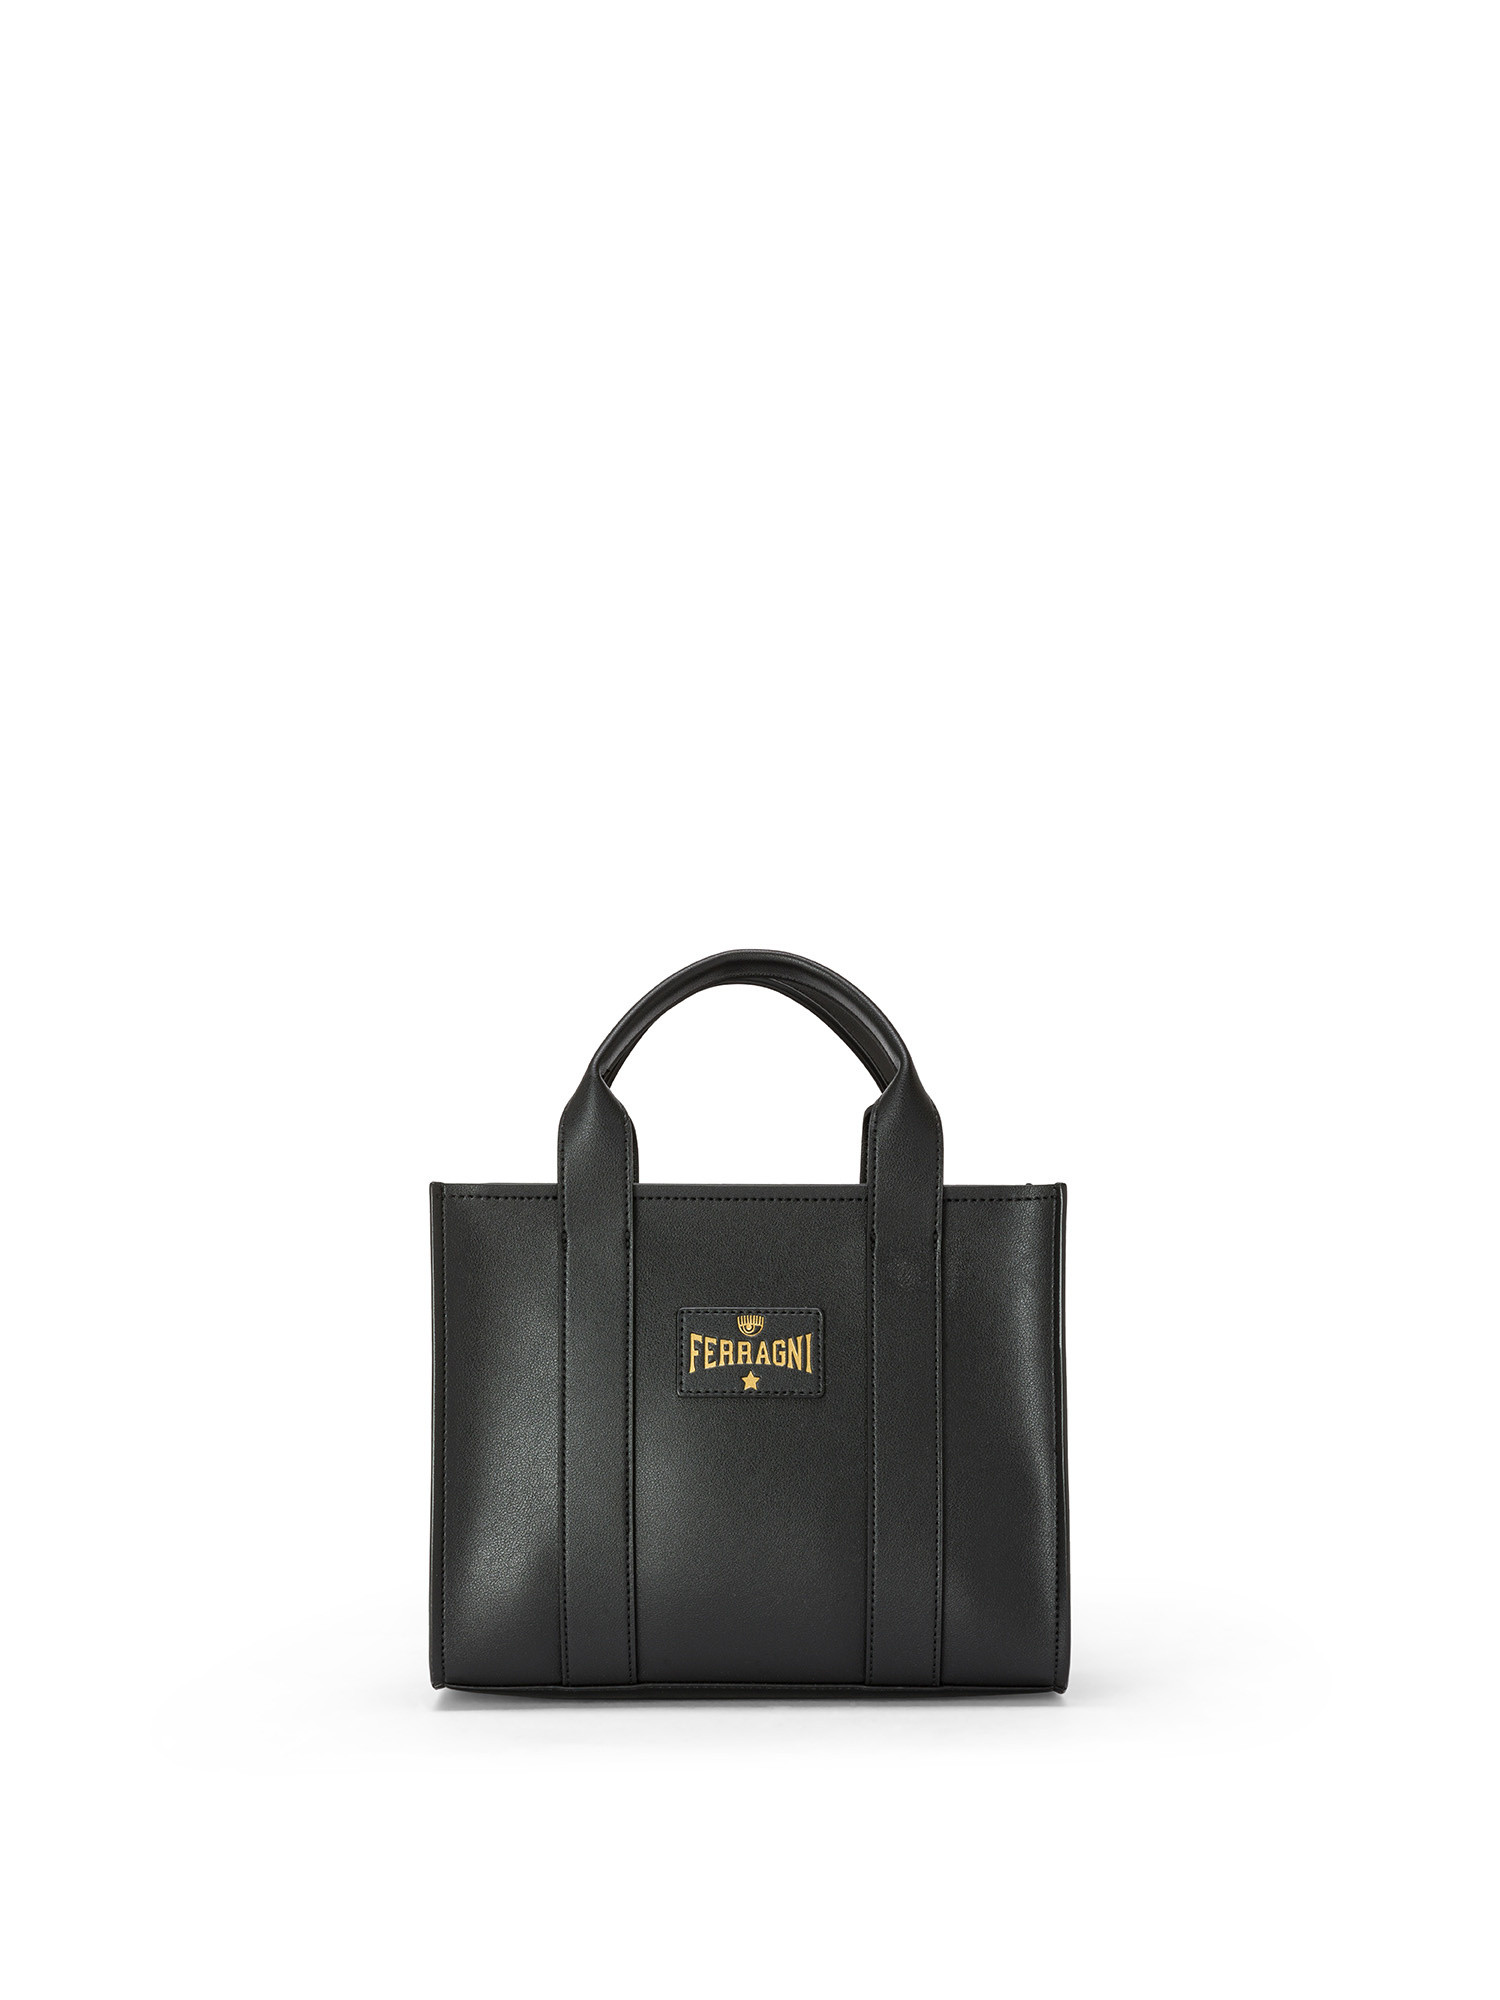 Chiara Ferragni - Shopping bag Range N stretch, Nero, large image number 0